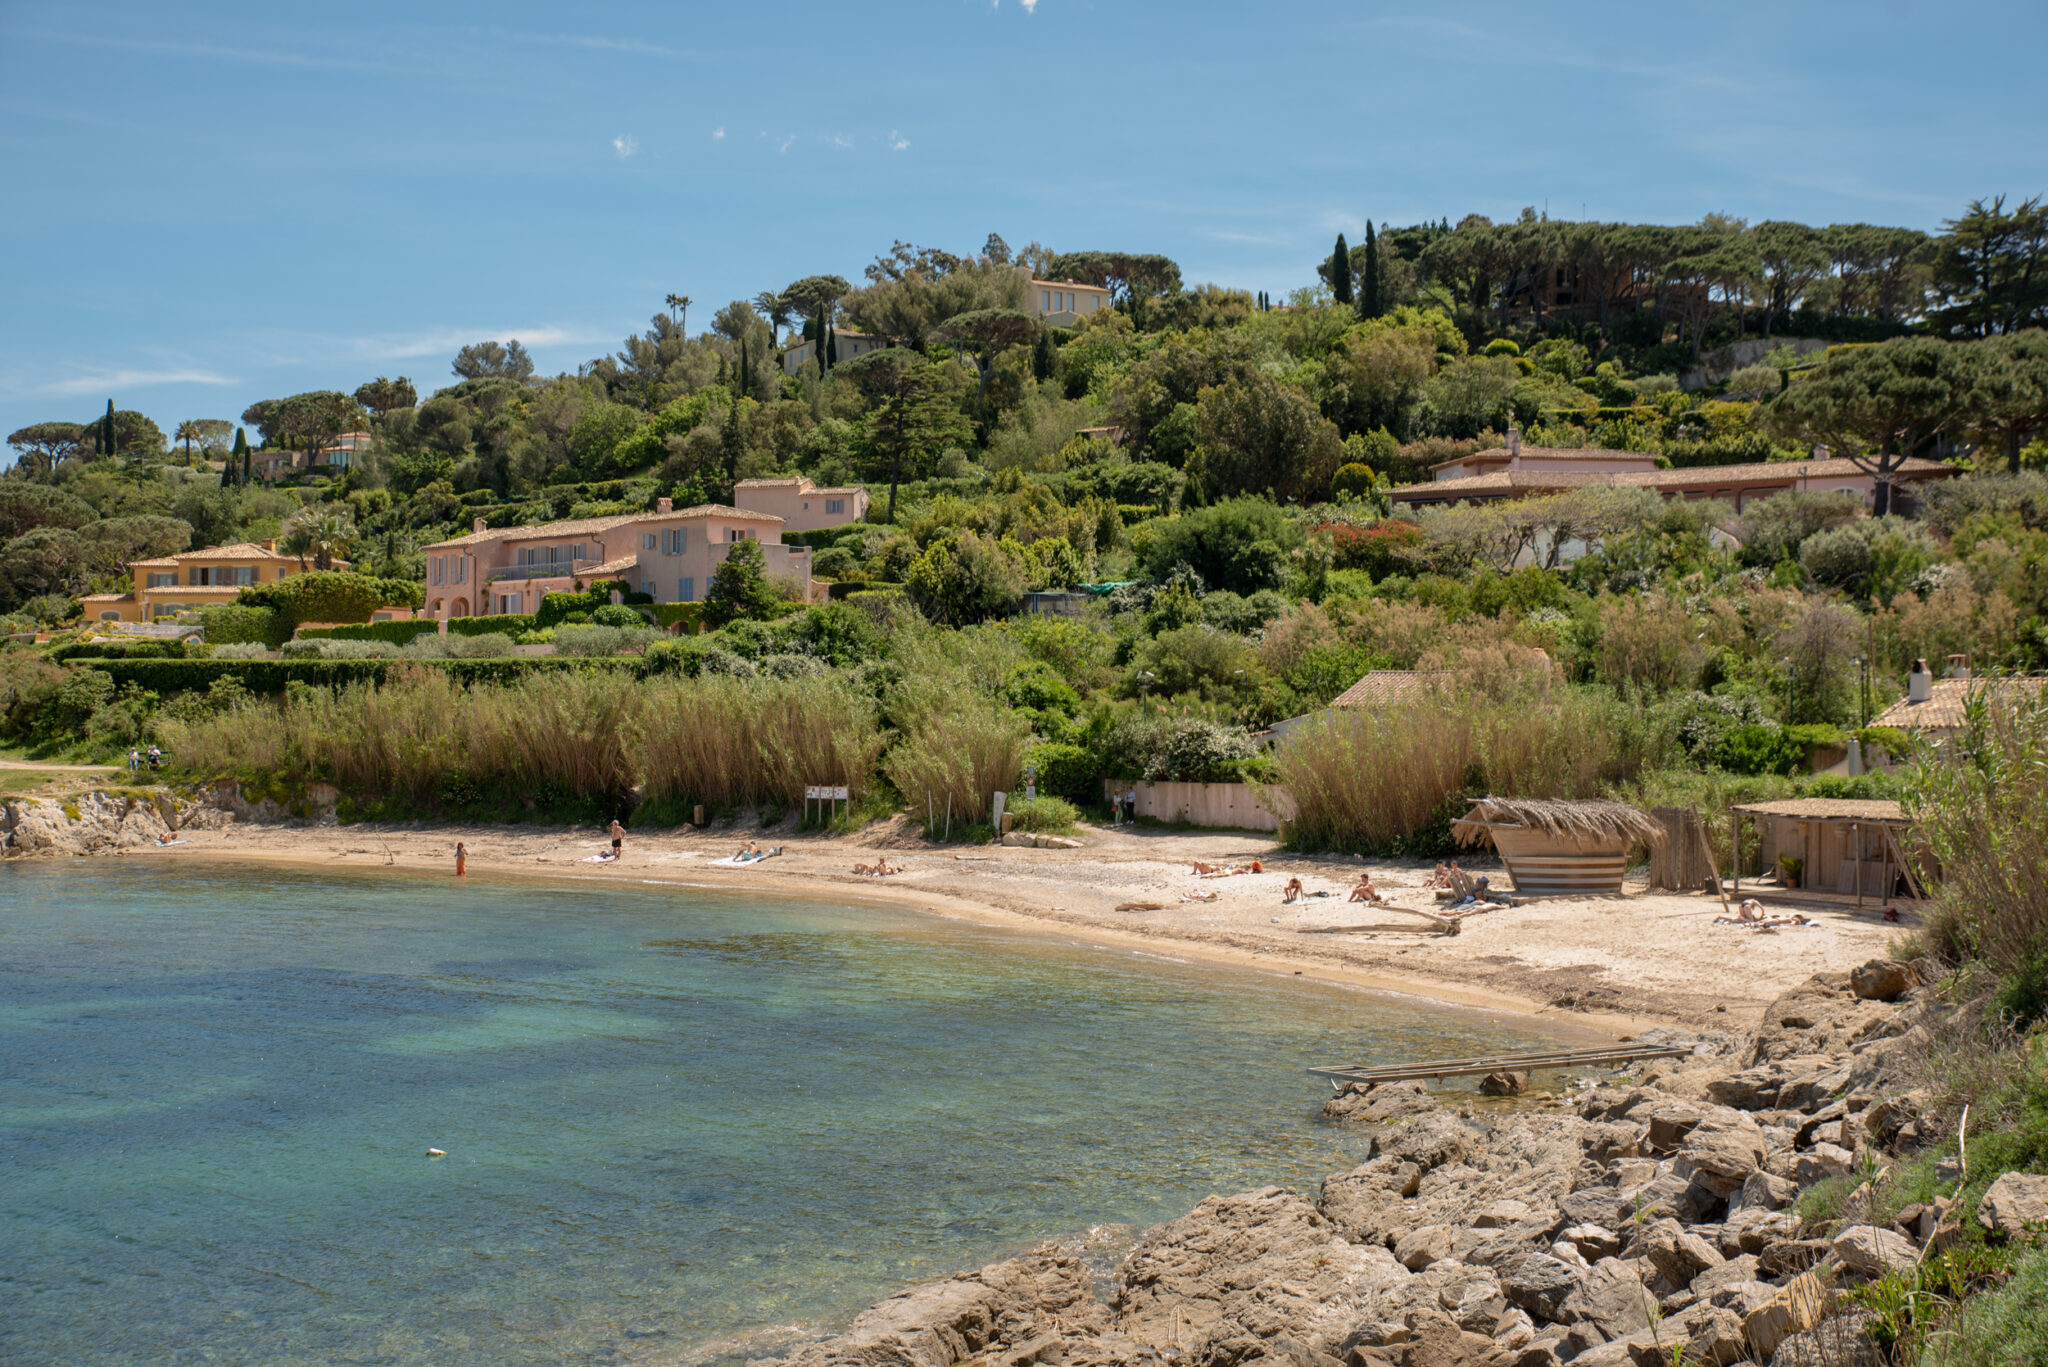 Best Beaches in St Tropez & the Bay of Saint-Tropez - Le Long Weekend